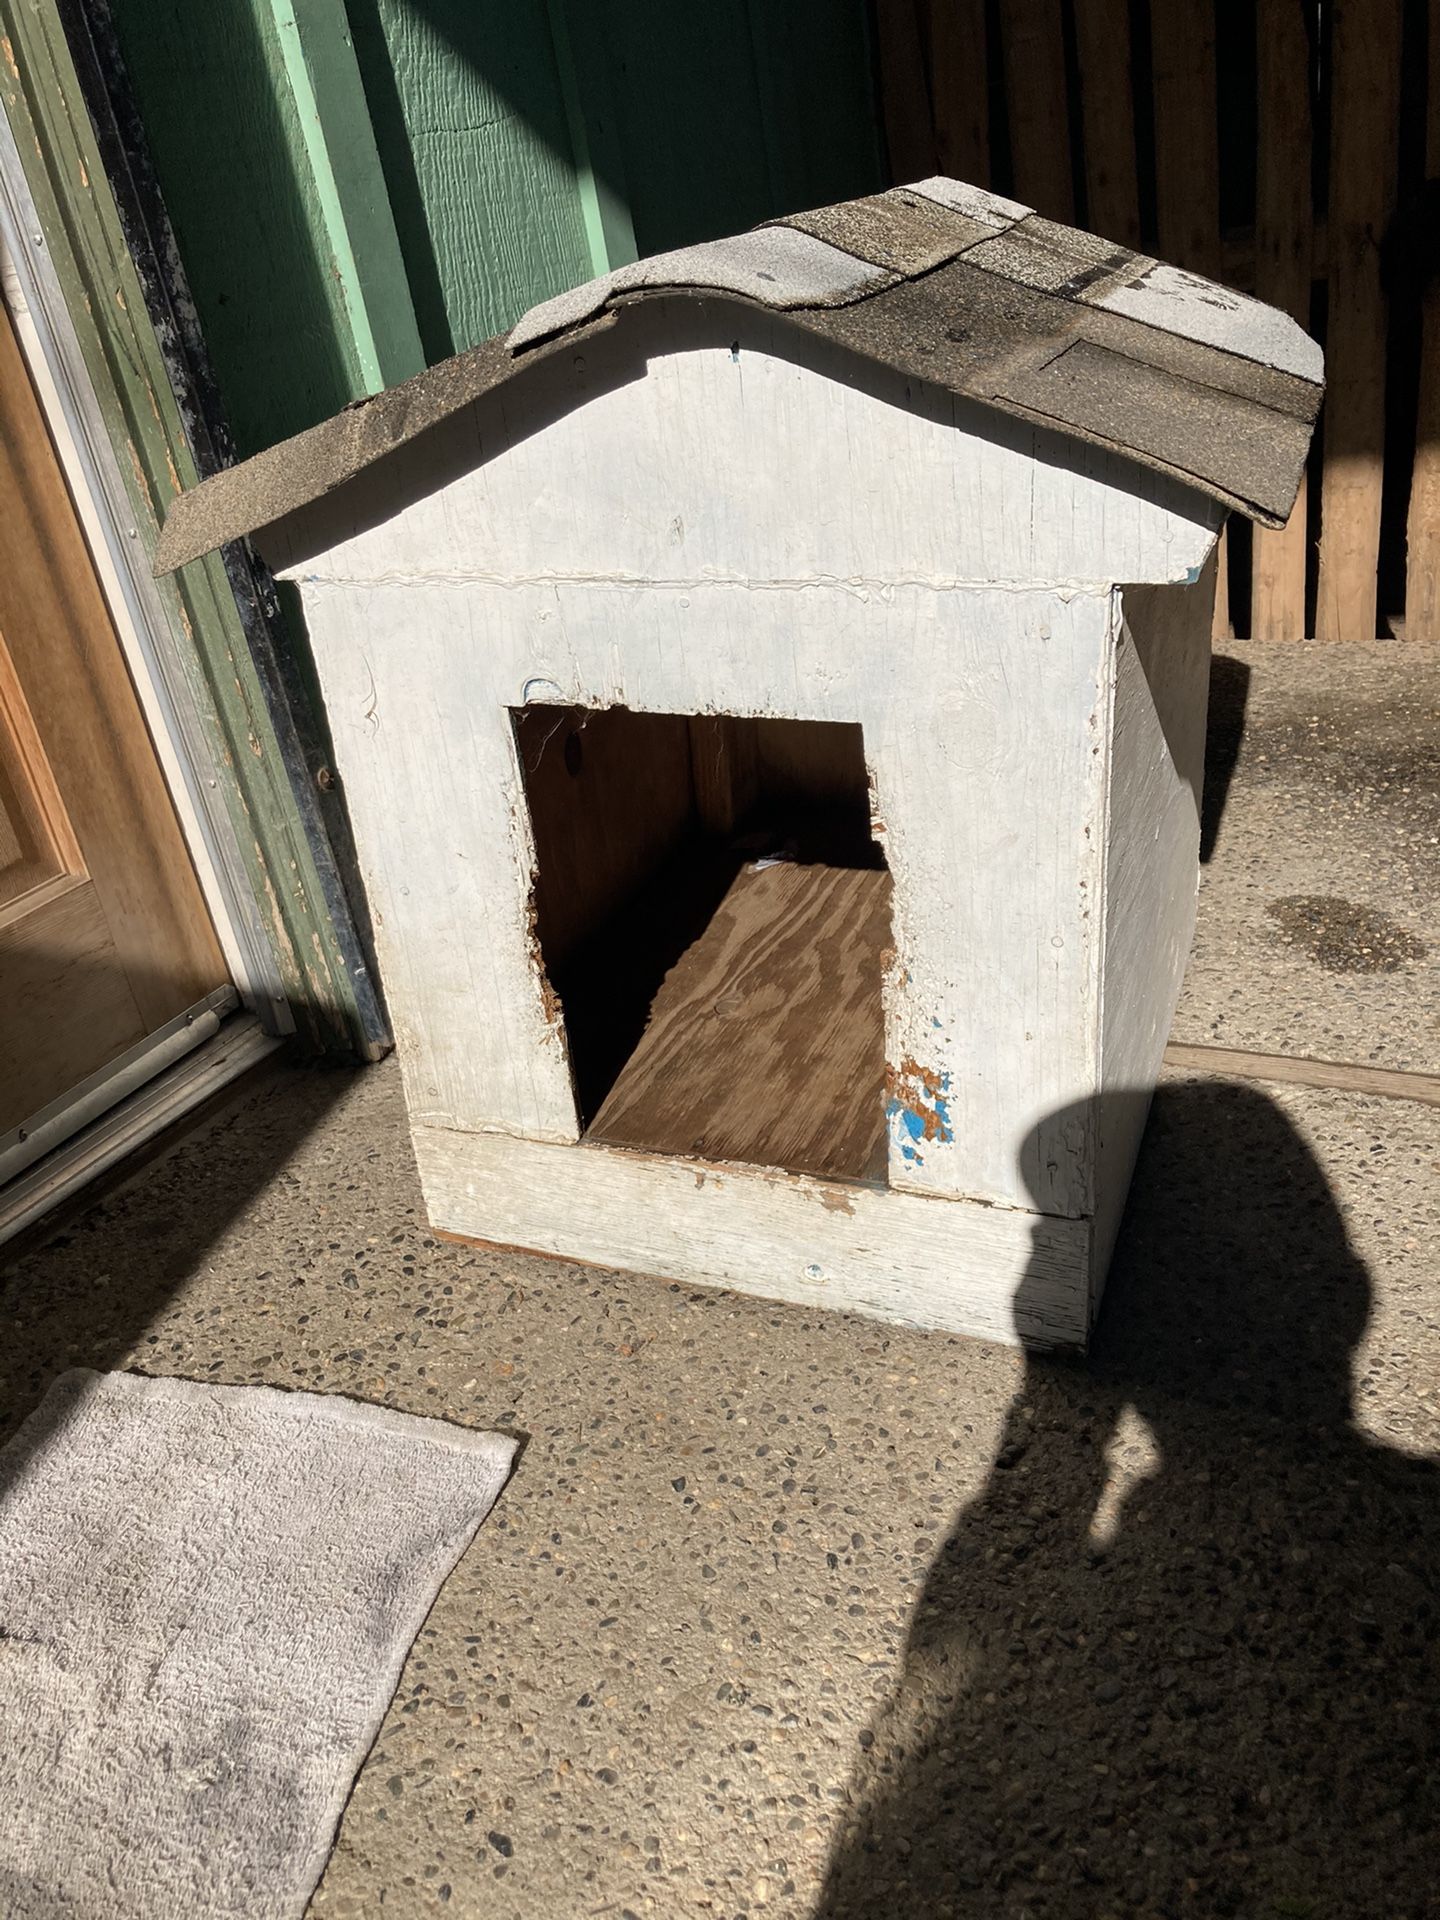 House for dog 🐶 little $25